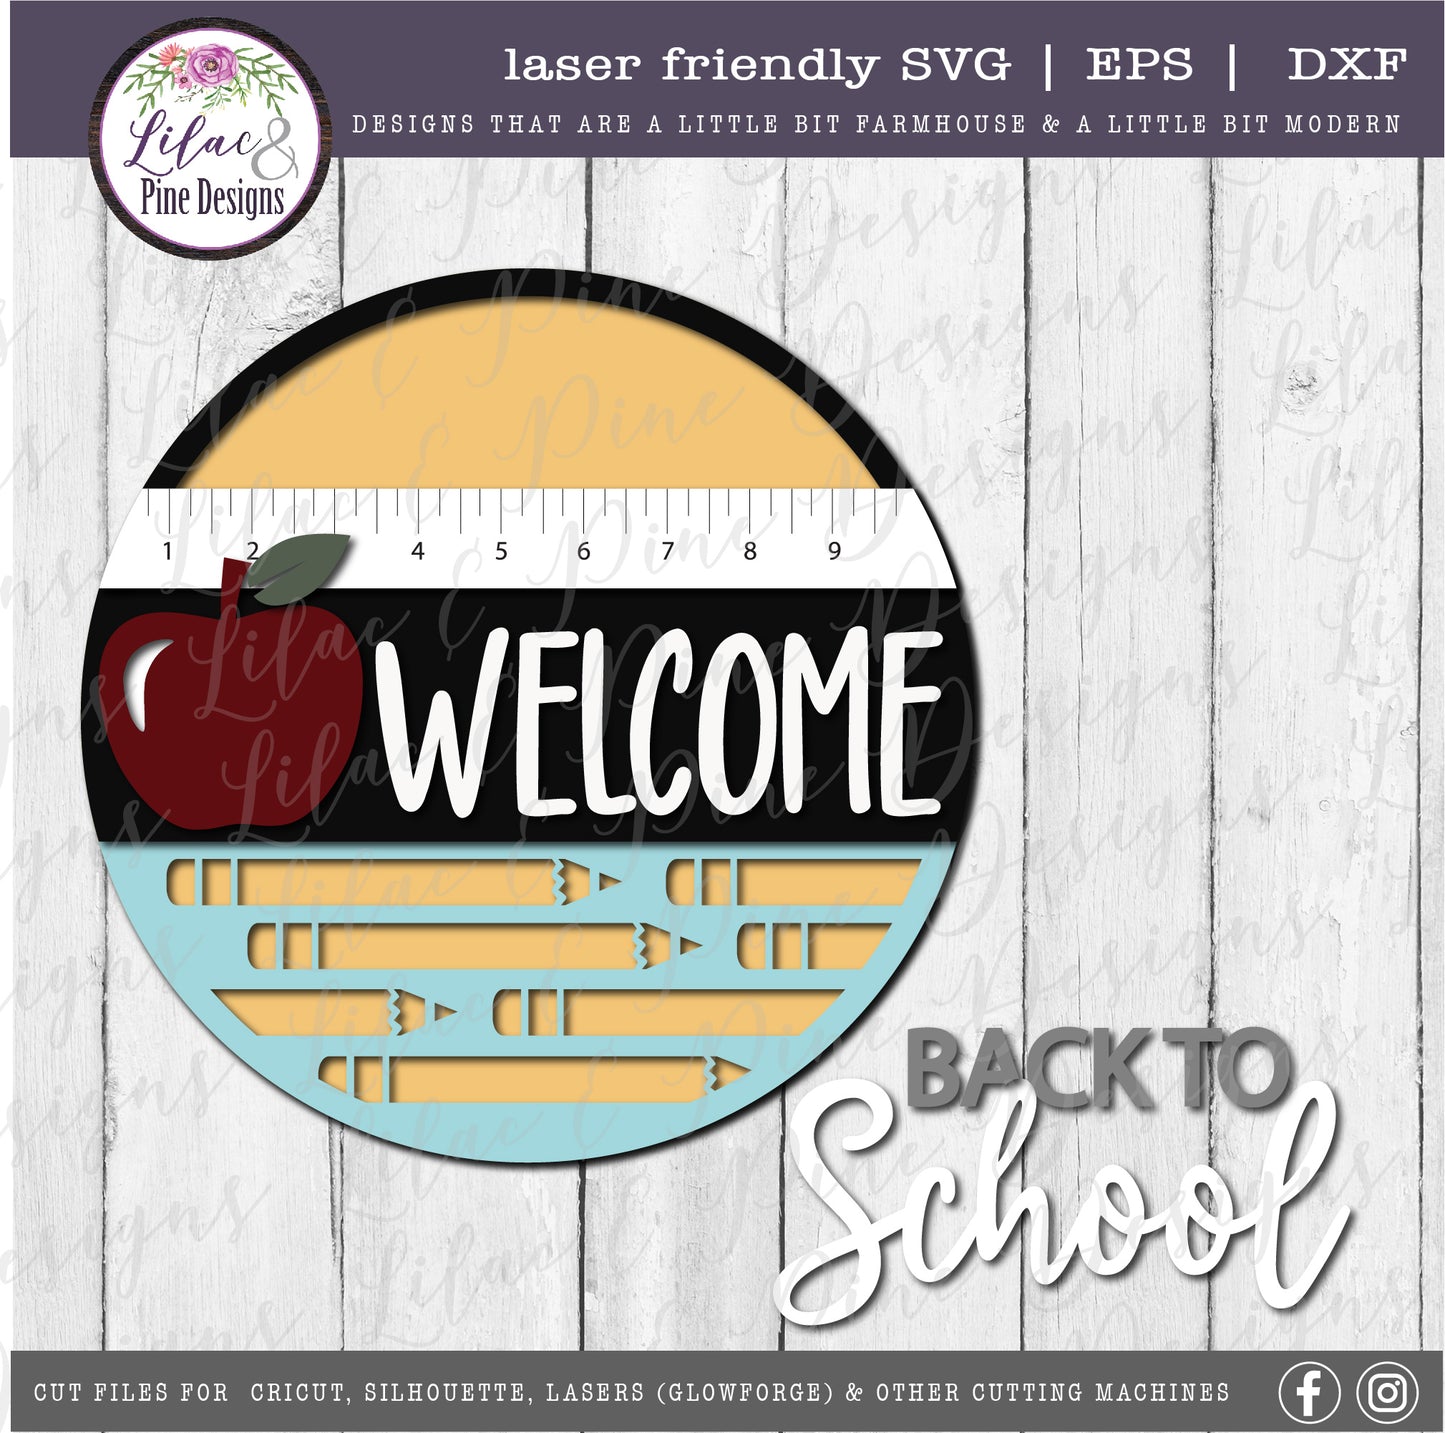 Back to School round SVG, School welcome SVG, fall decor SVG, classroom decor, laser cut file, Glowforge SVG